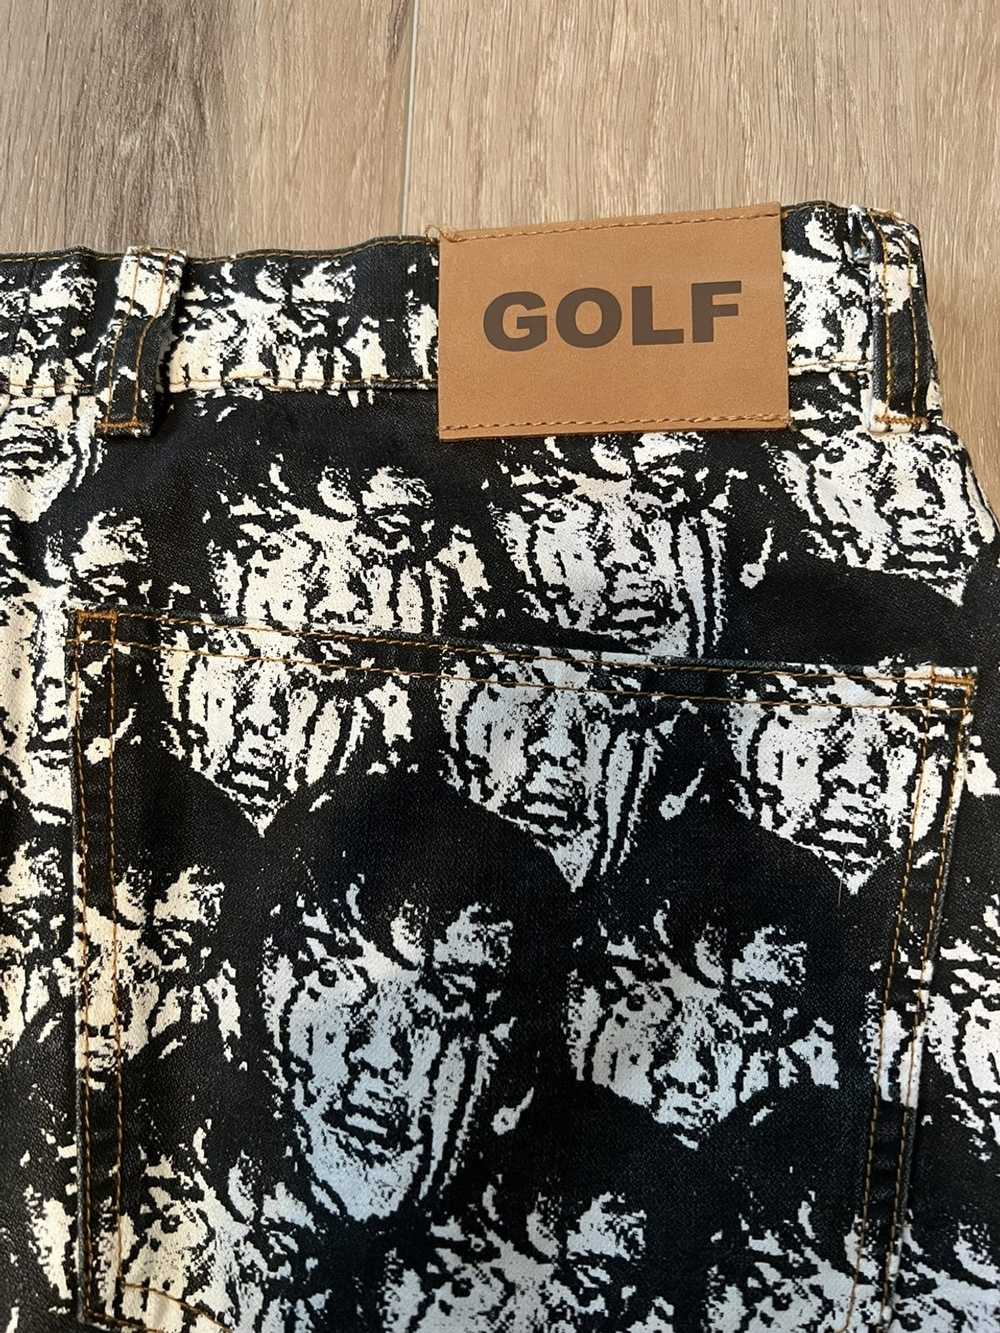 Golf Wang Golf Wang Punk Face Pants - image 6